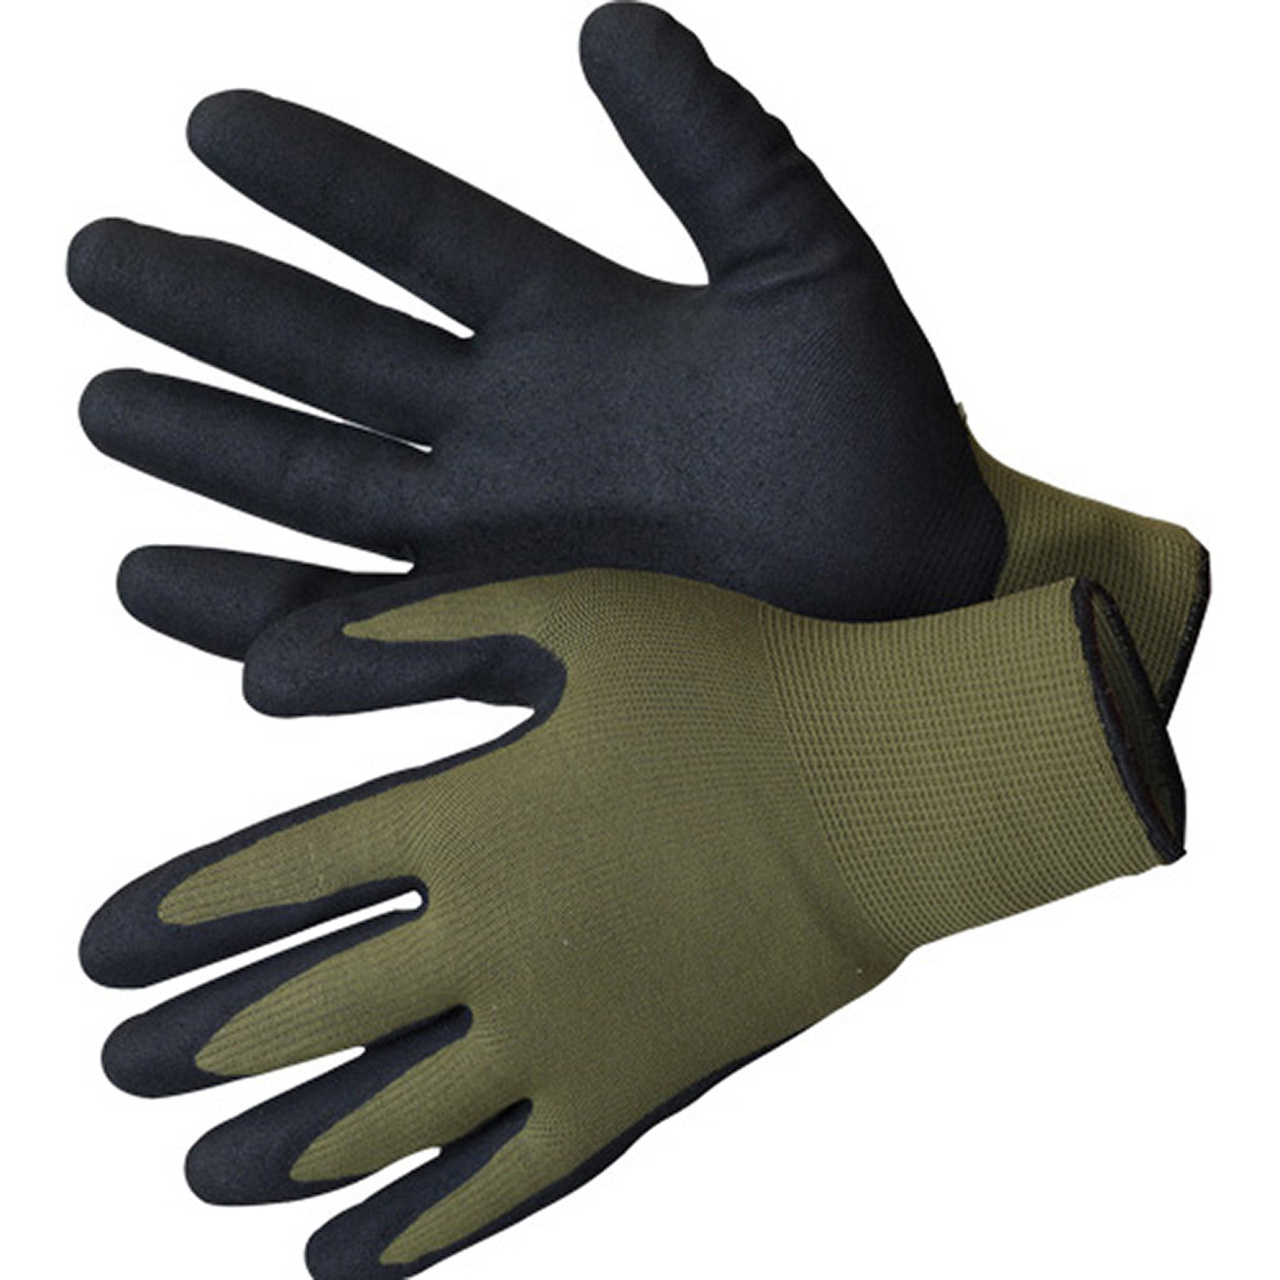 Handske Frost, storlek 10 grön/svart